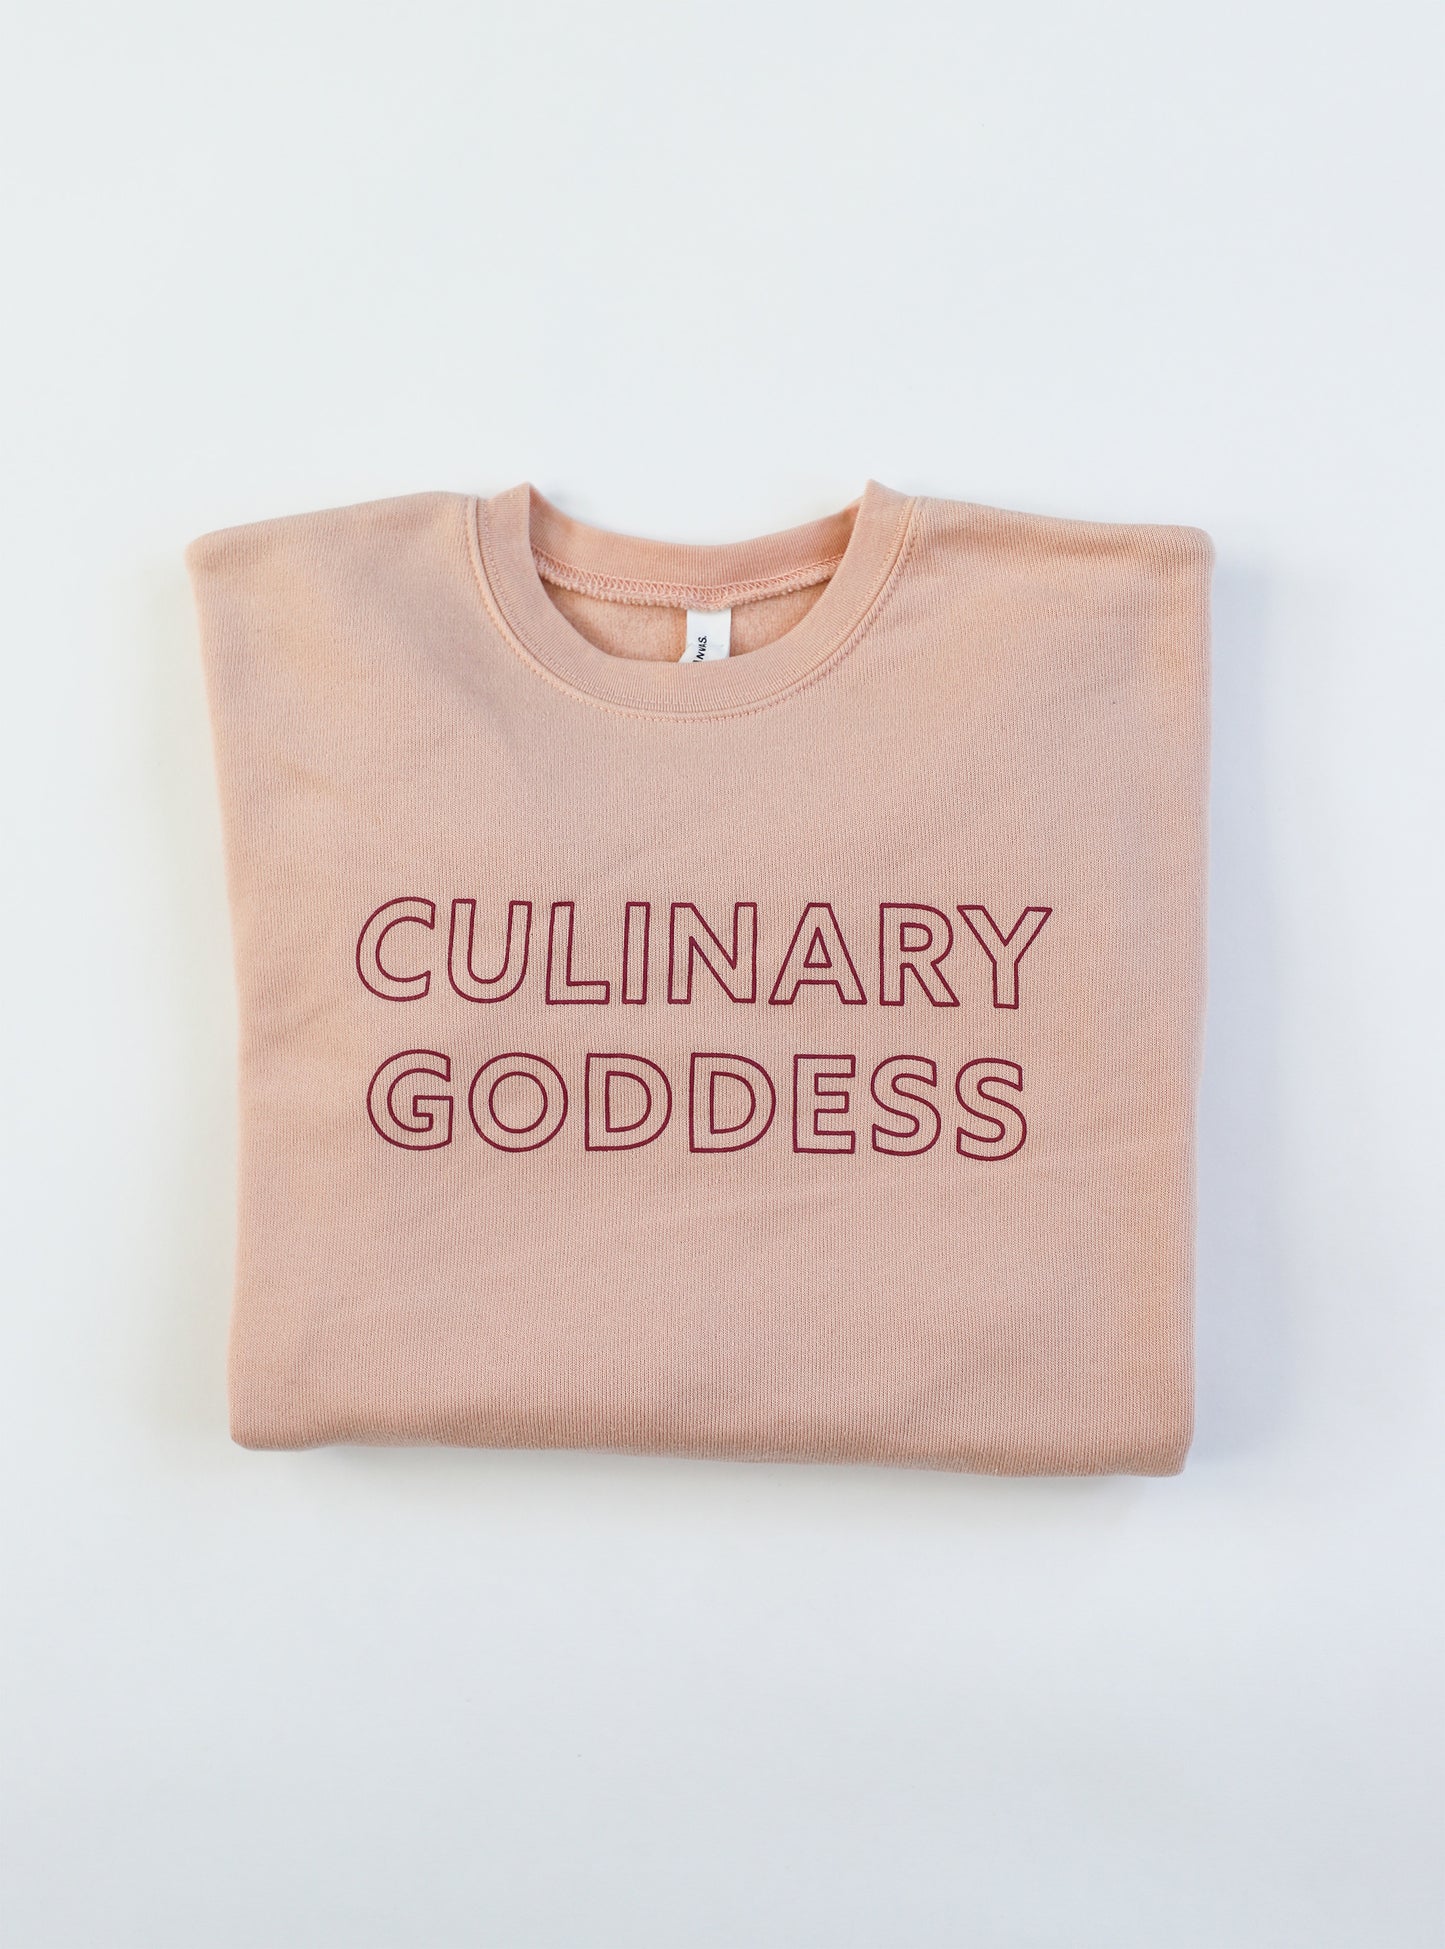 Folded pink crewneck sweatshirt with the words "Culinary Goddess"